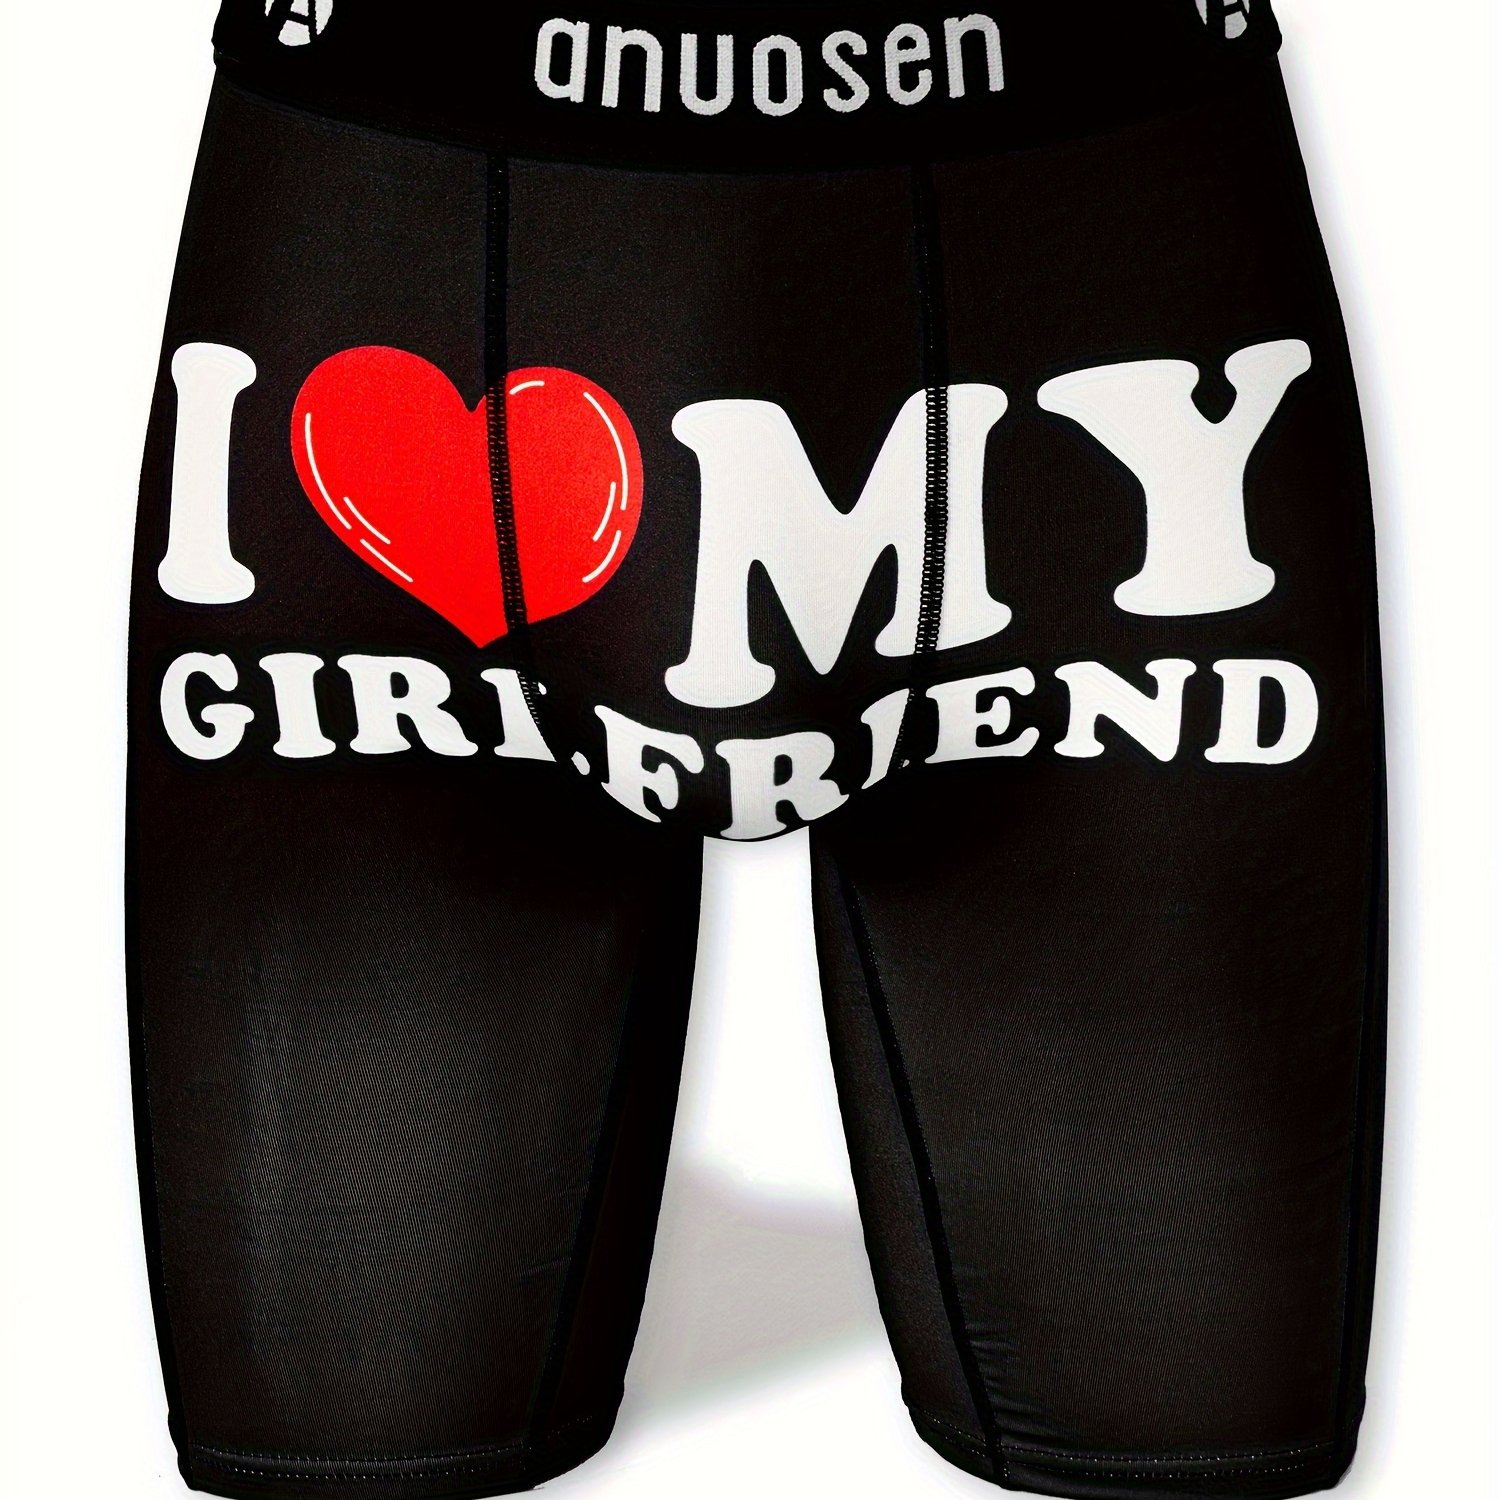 I Love My Girlfriend Boxer Shorts